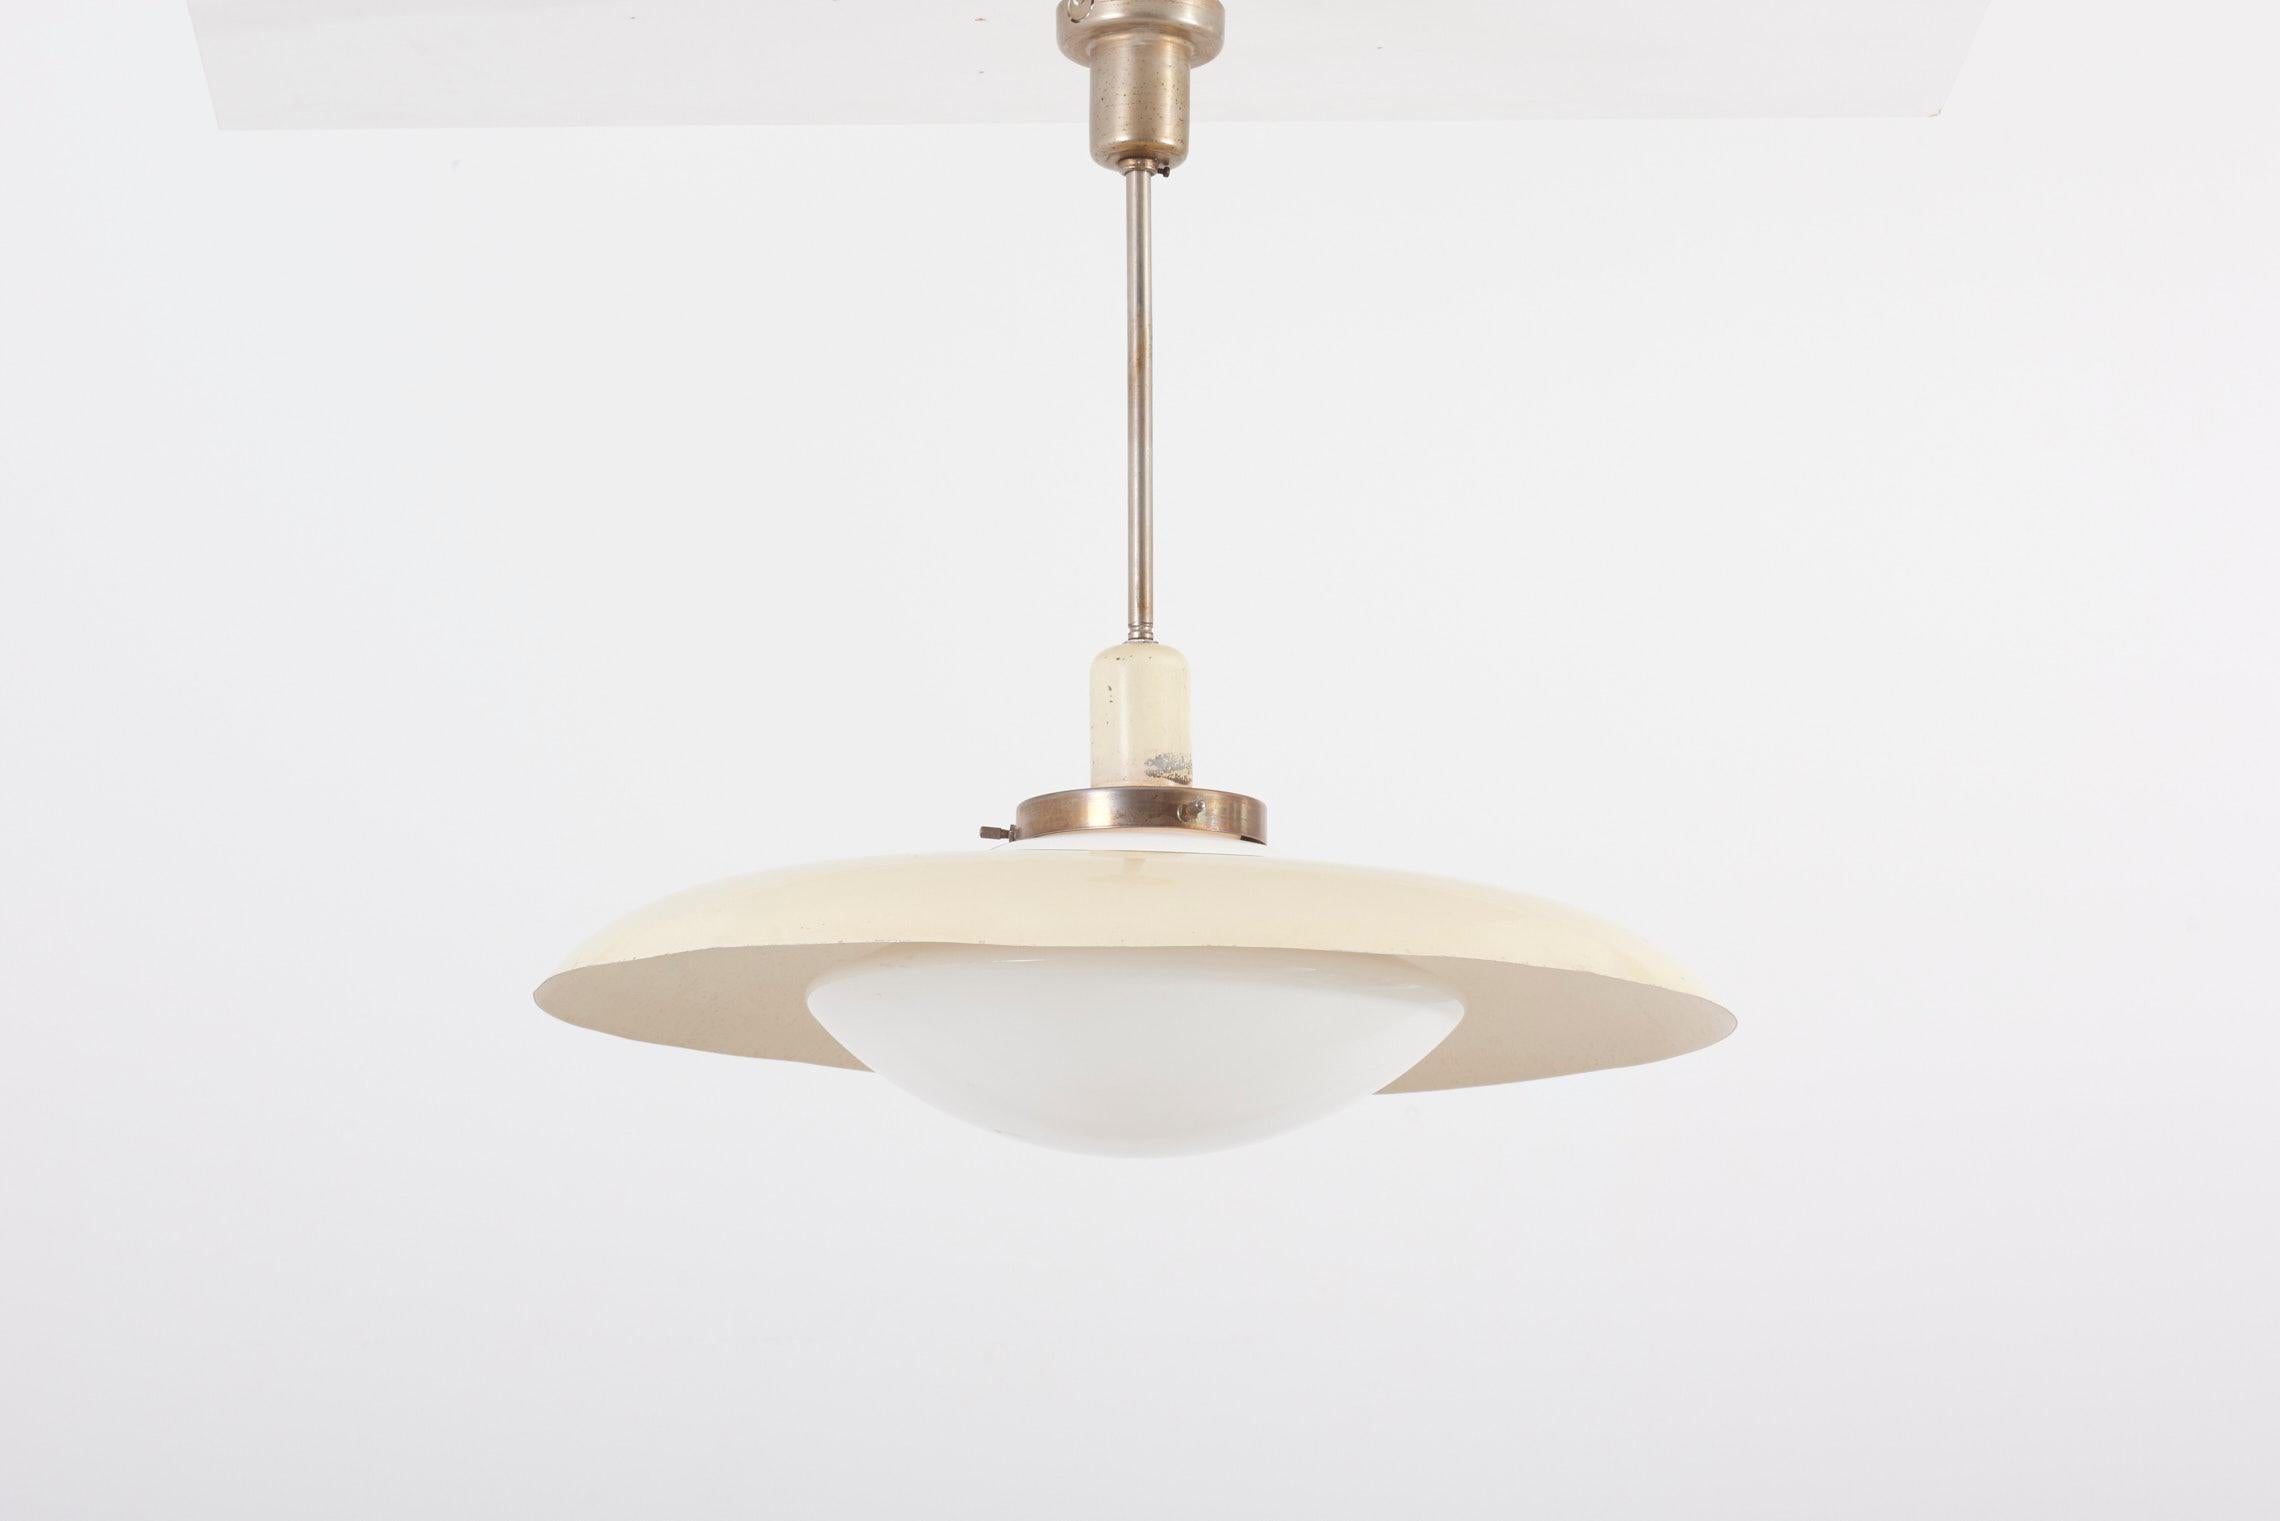 1930s Bauhaus Style Pendant Lamp In Fair Condition For Sale In Berlin, DE